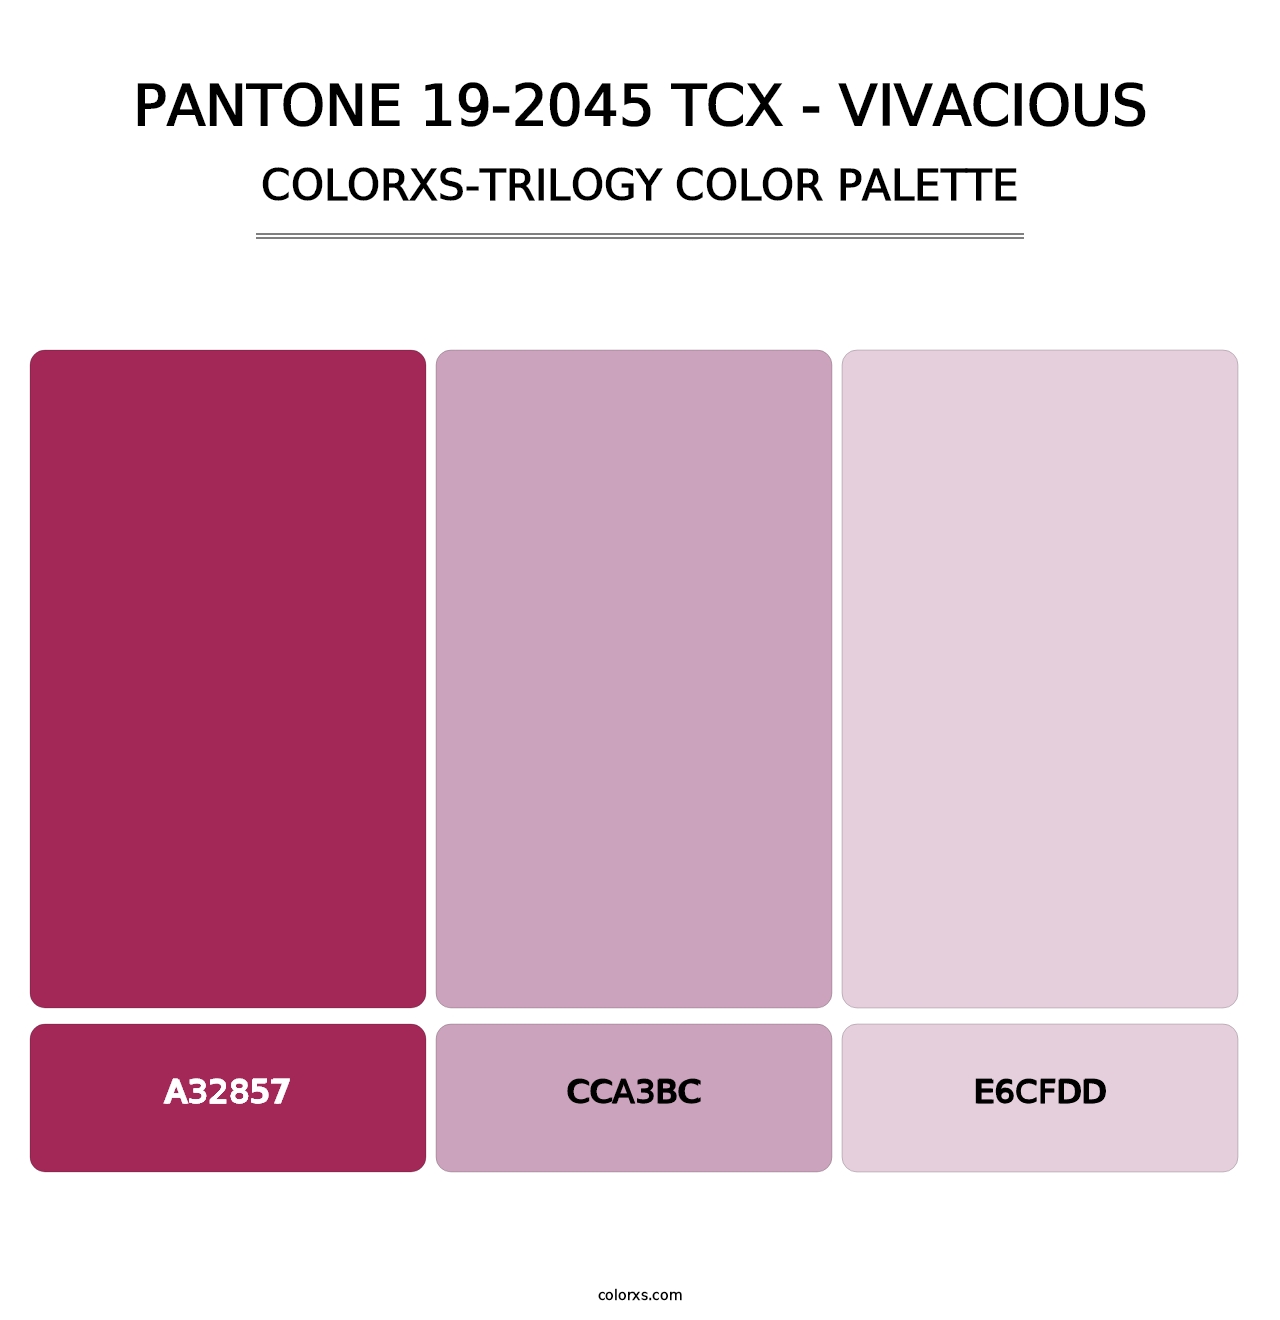 PANTONE 19-2045 TCX - Vivacious - Colorxs Trilogy Palette